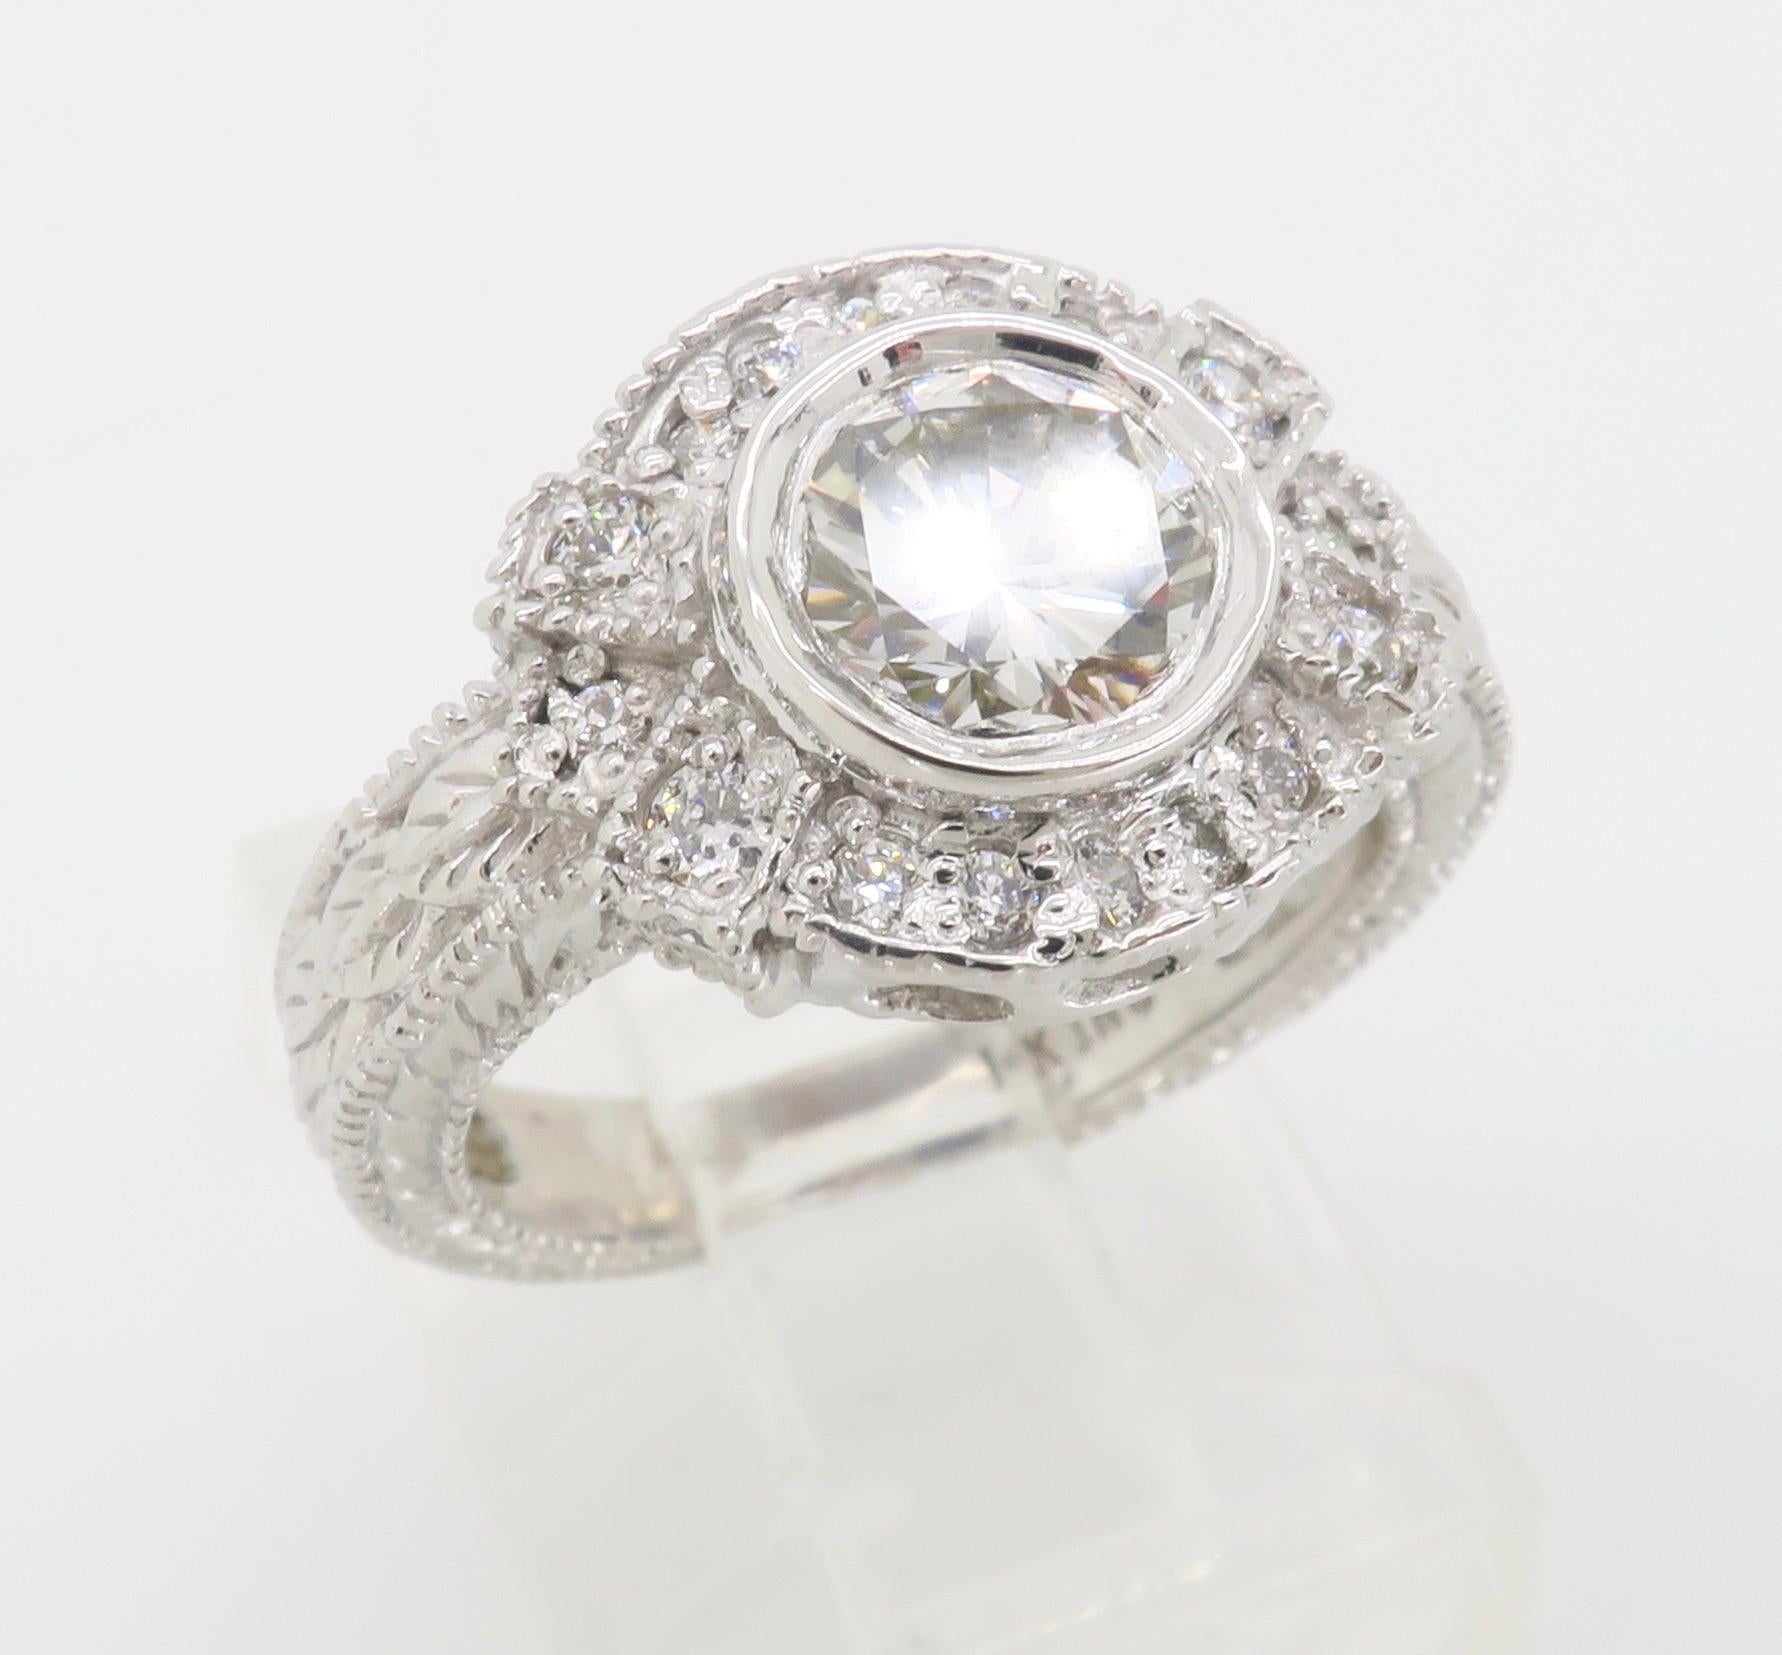 Round Cut Vintage Inspired 1.27 Carat Diamond Ring Made in 14 Karat White Gold For Sale